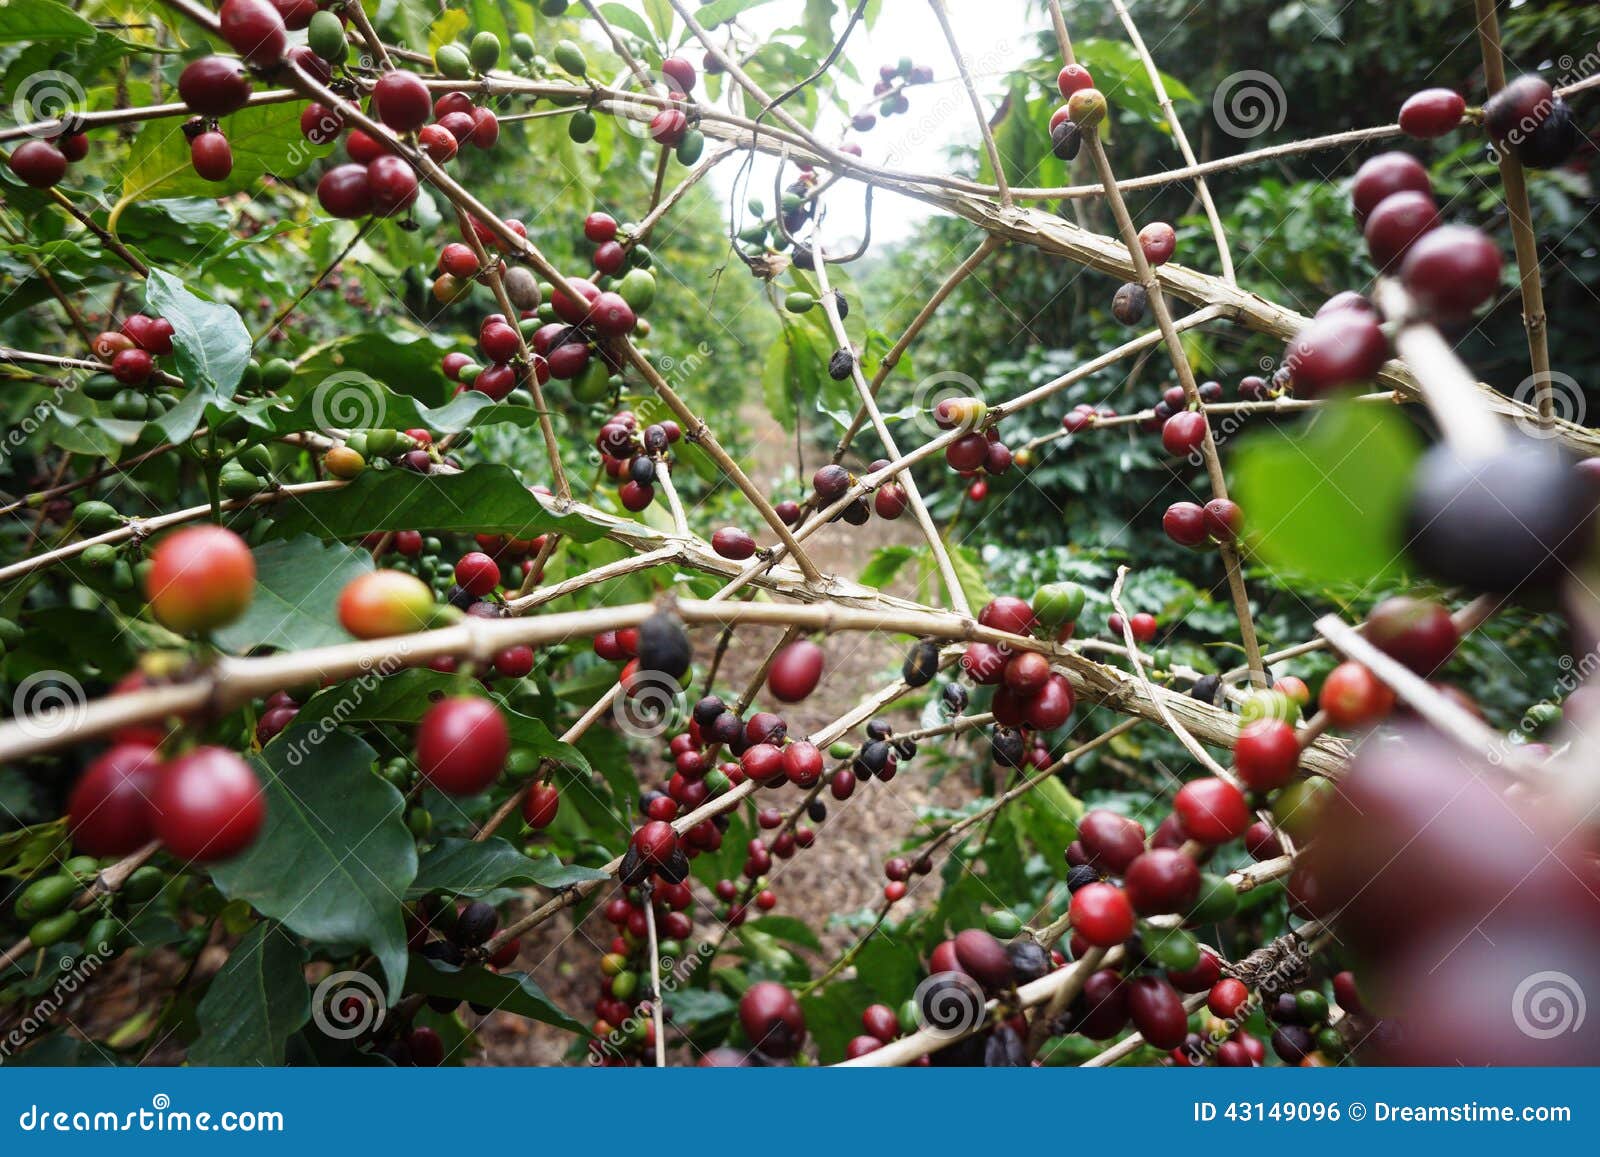 coffee plantation in the rural town of carmo de minas brazil